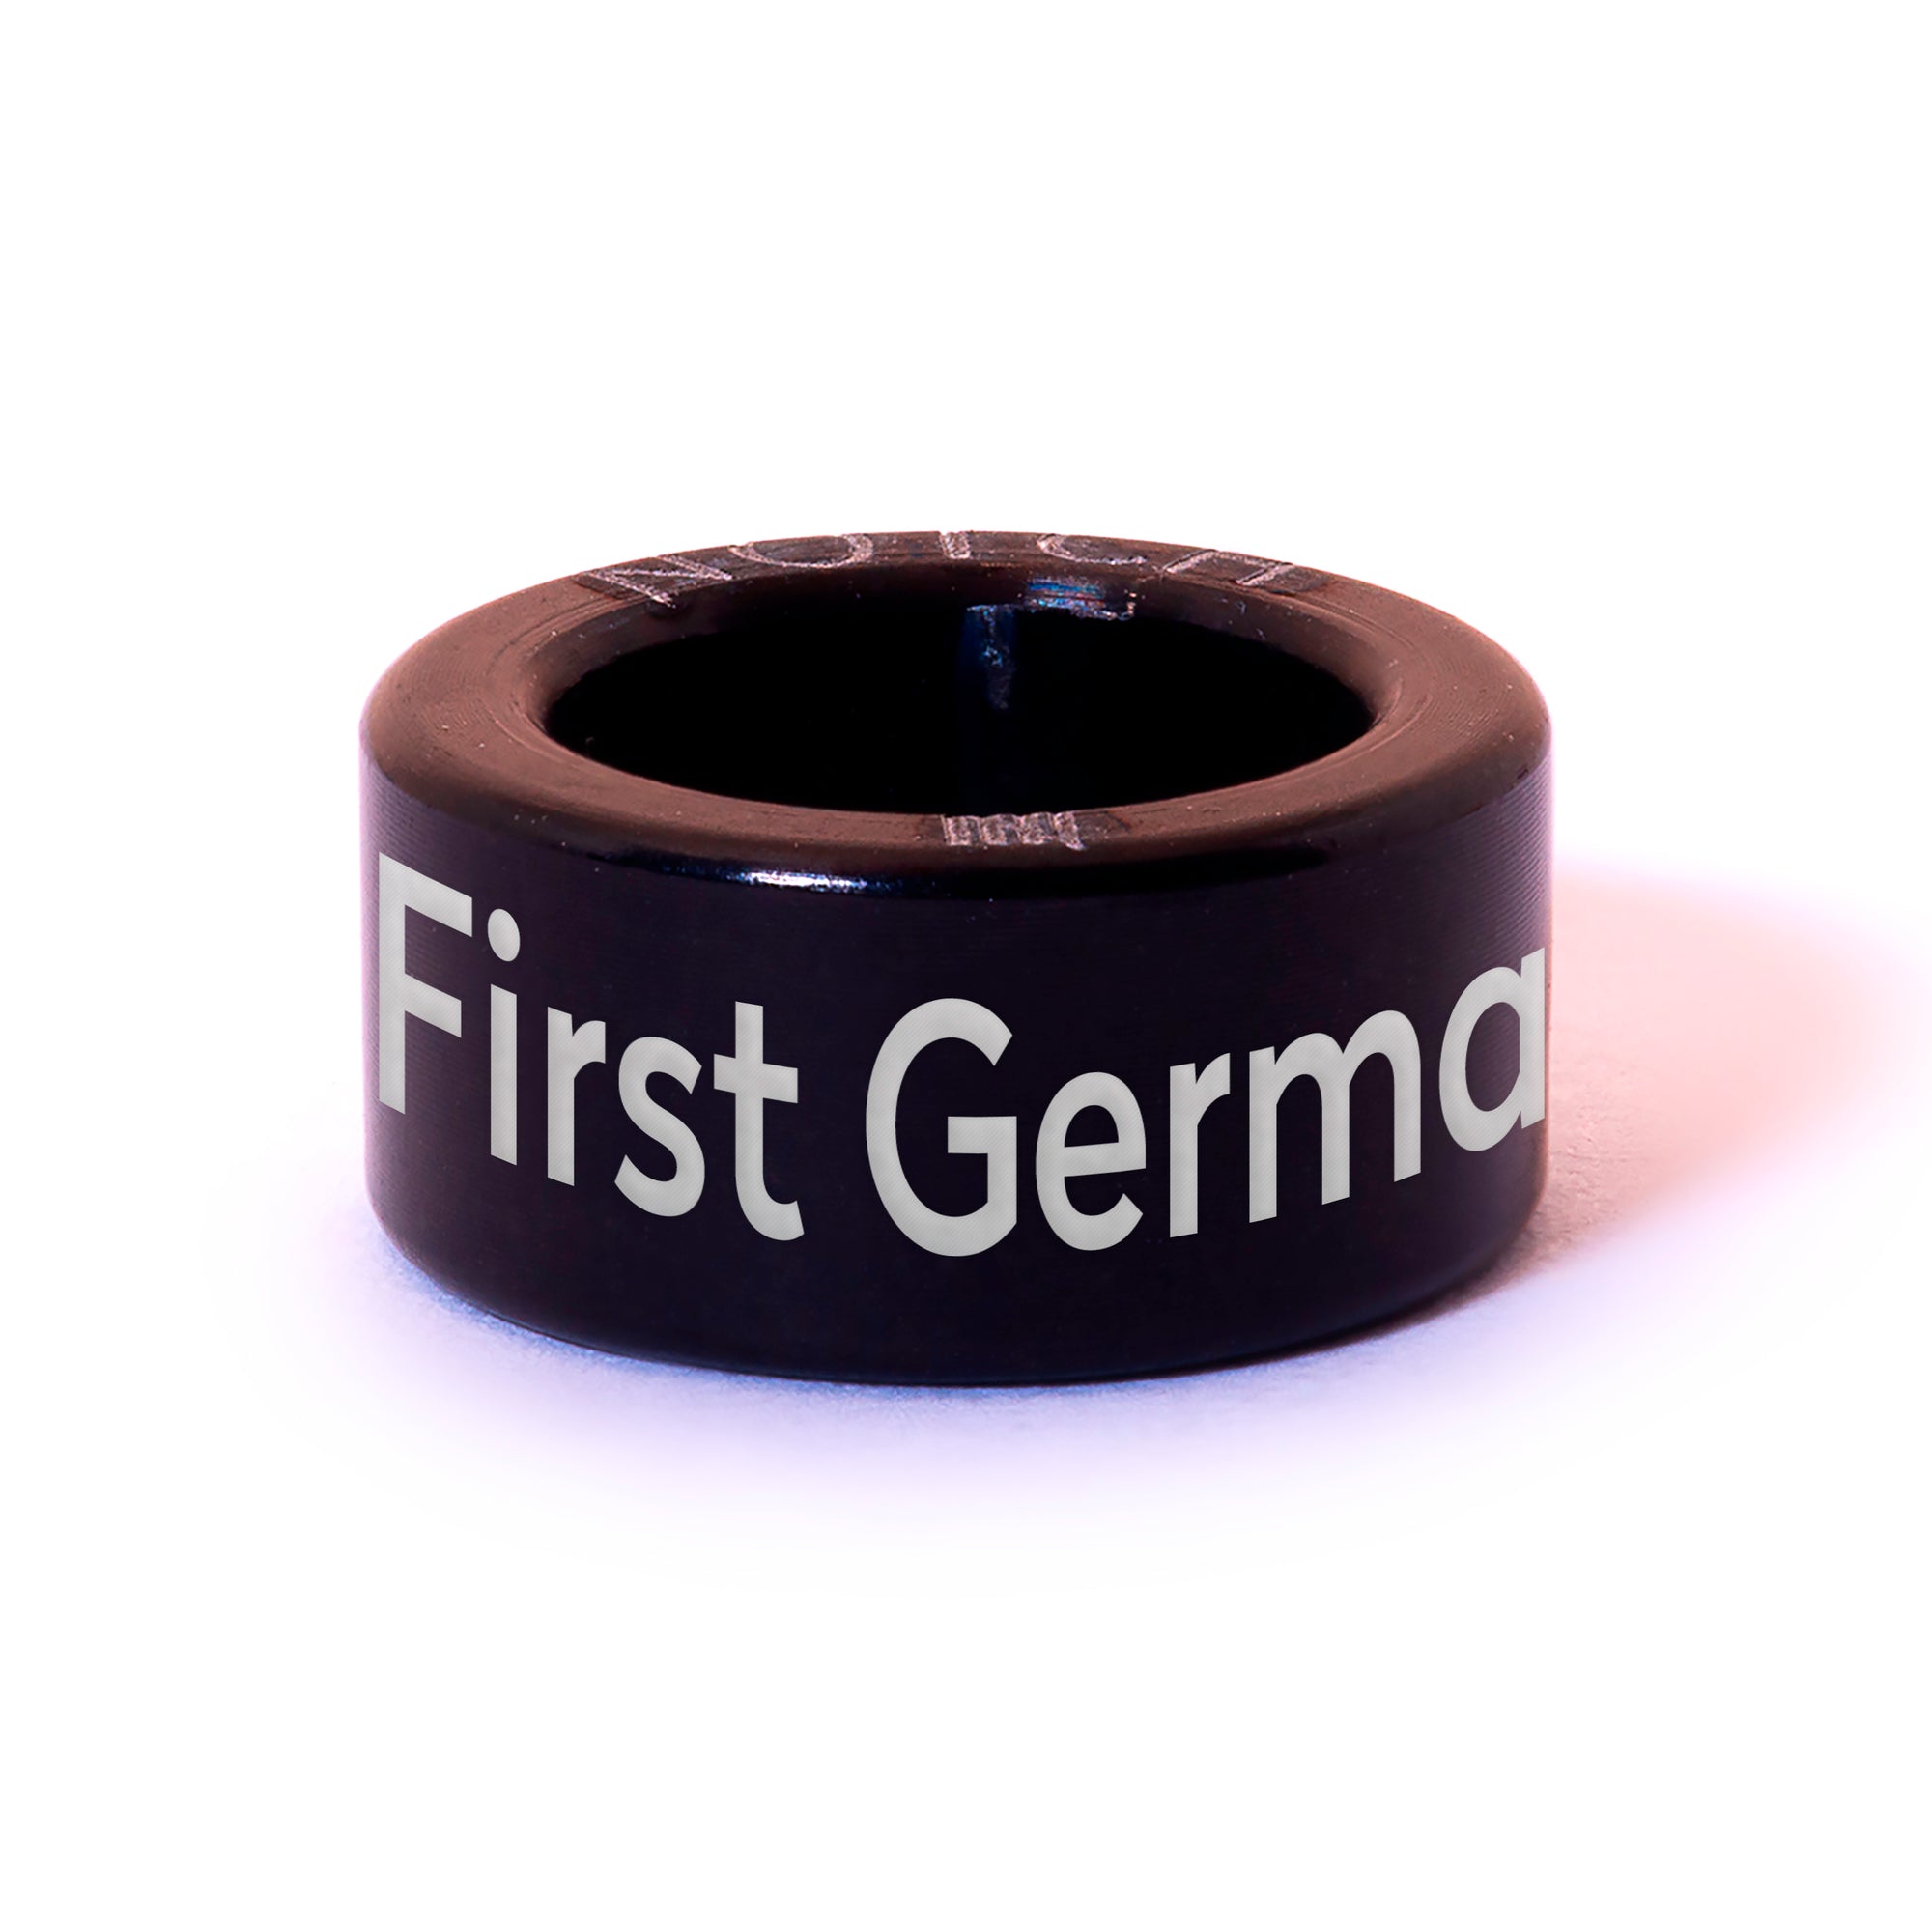 First German NOTCH Charm